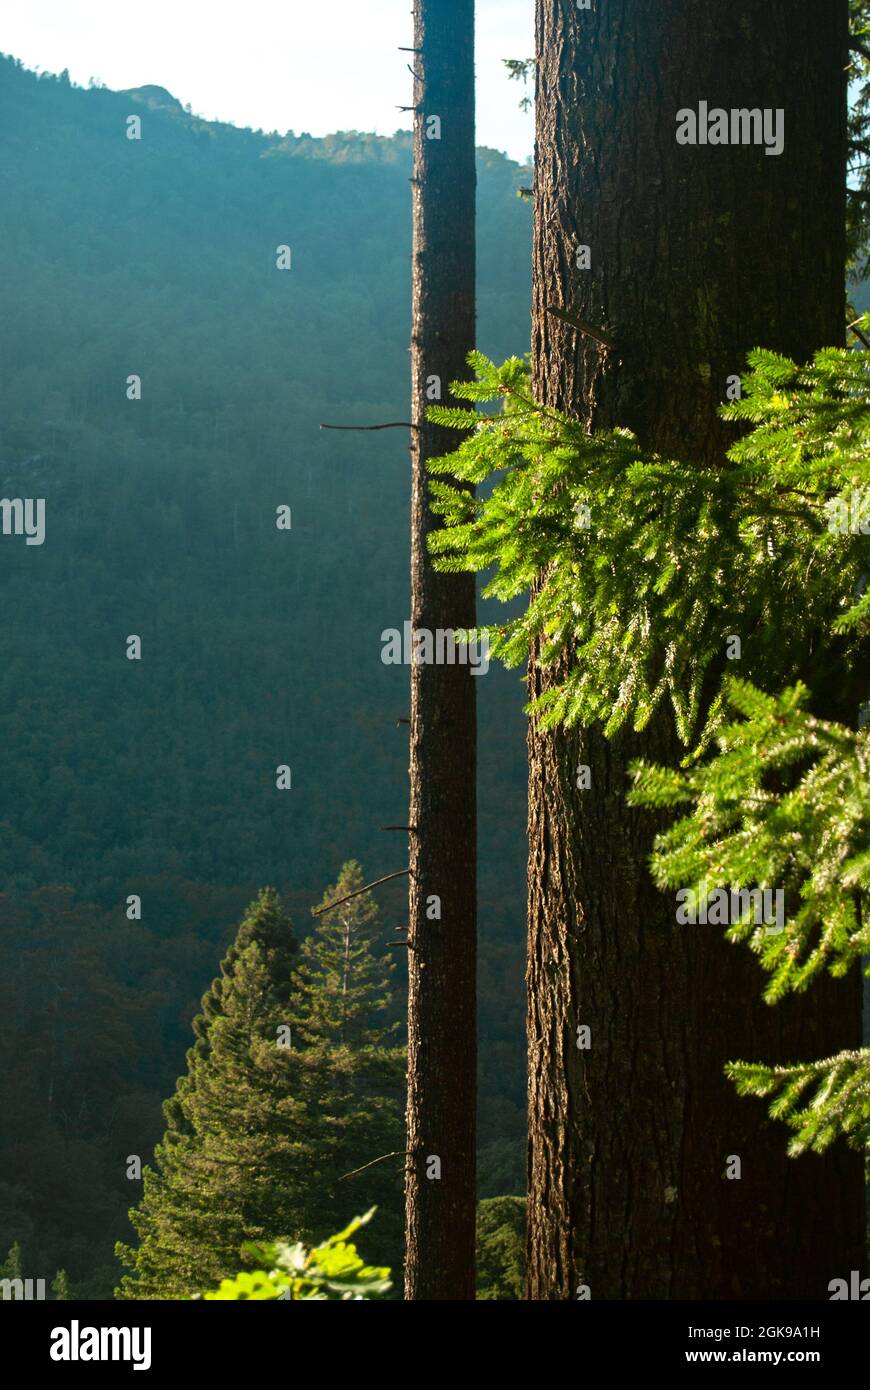 Berglandschaft durch vertikale Baumstämme - Vertikal, selektiver Fokus Stockfoto